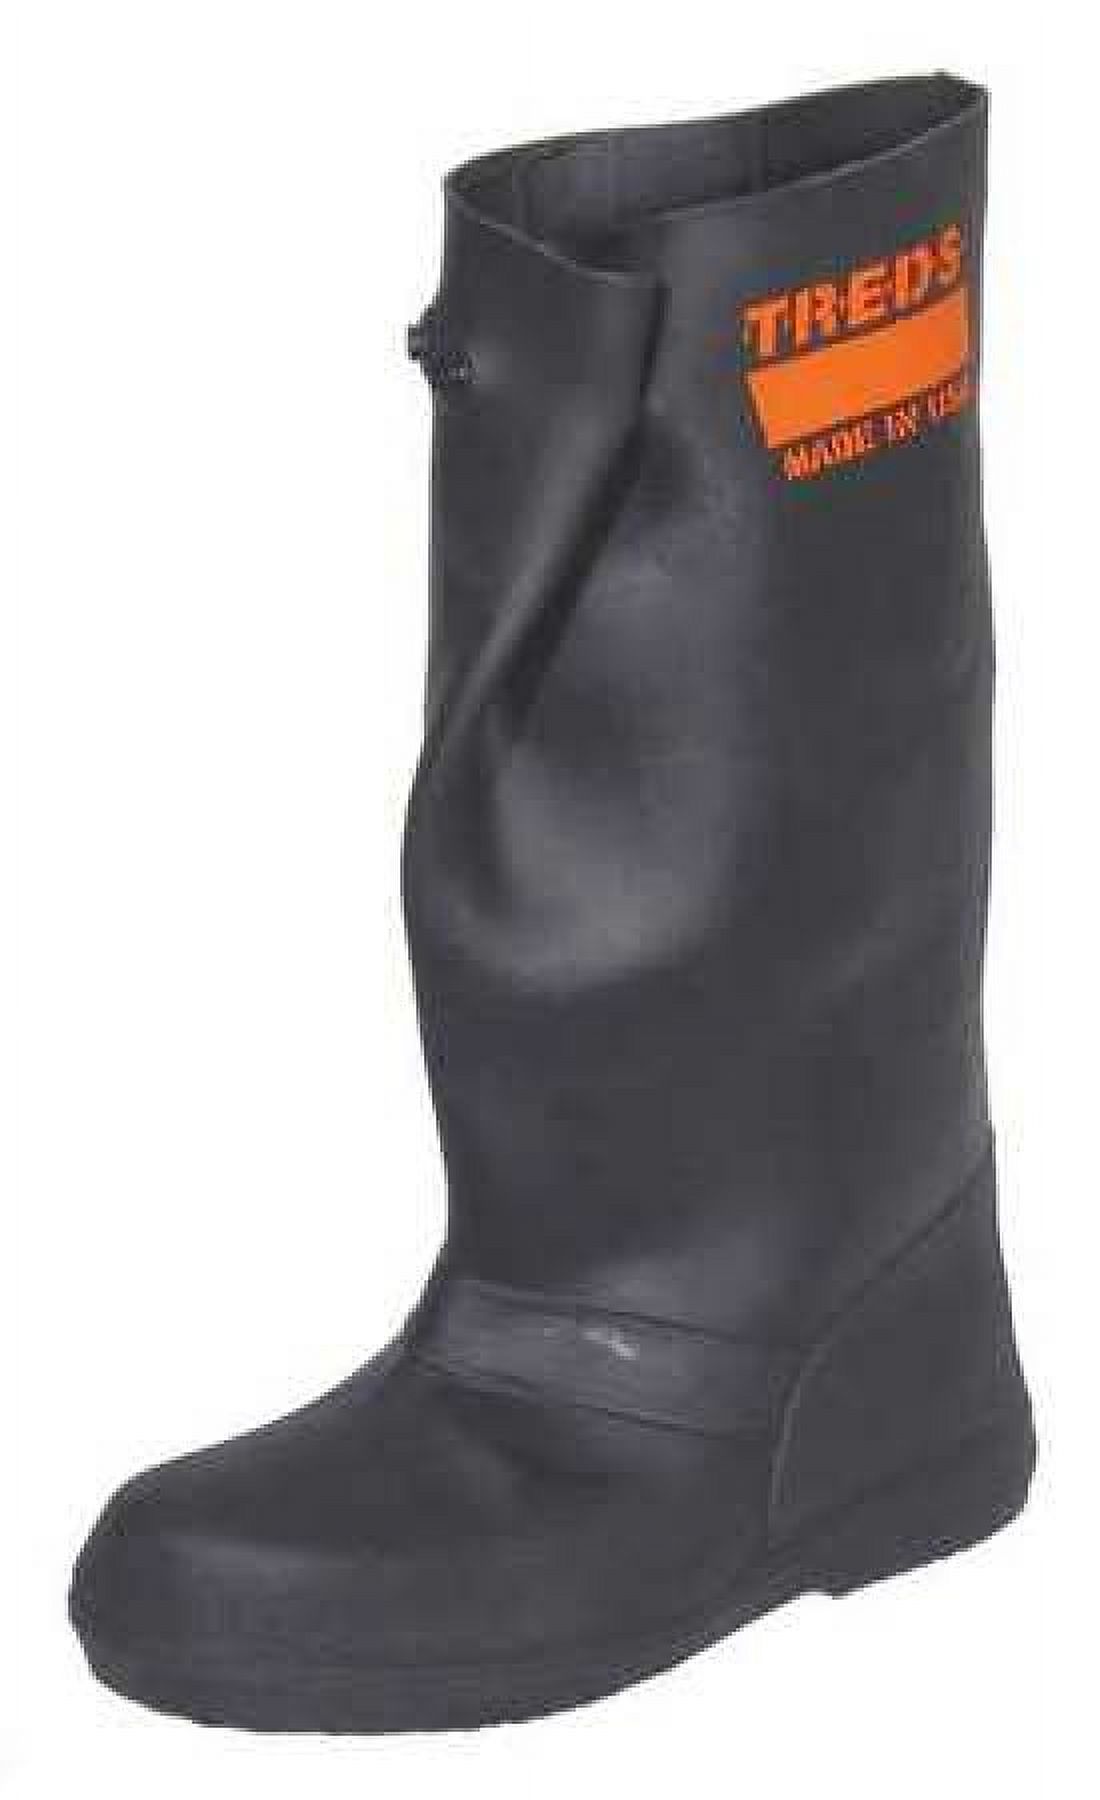 Advantage Product 17855 Size 13-14&#44; 17 in. Puncture & Tear Resistant Slush Boots - Black - image 3 of 3